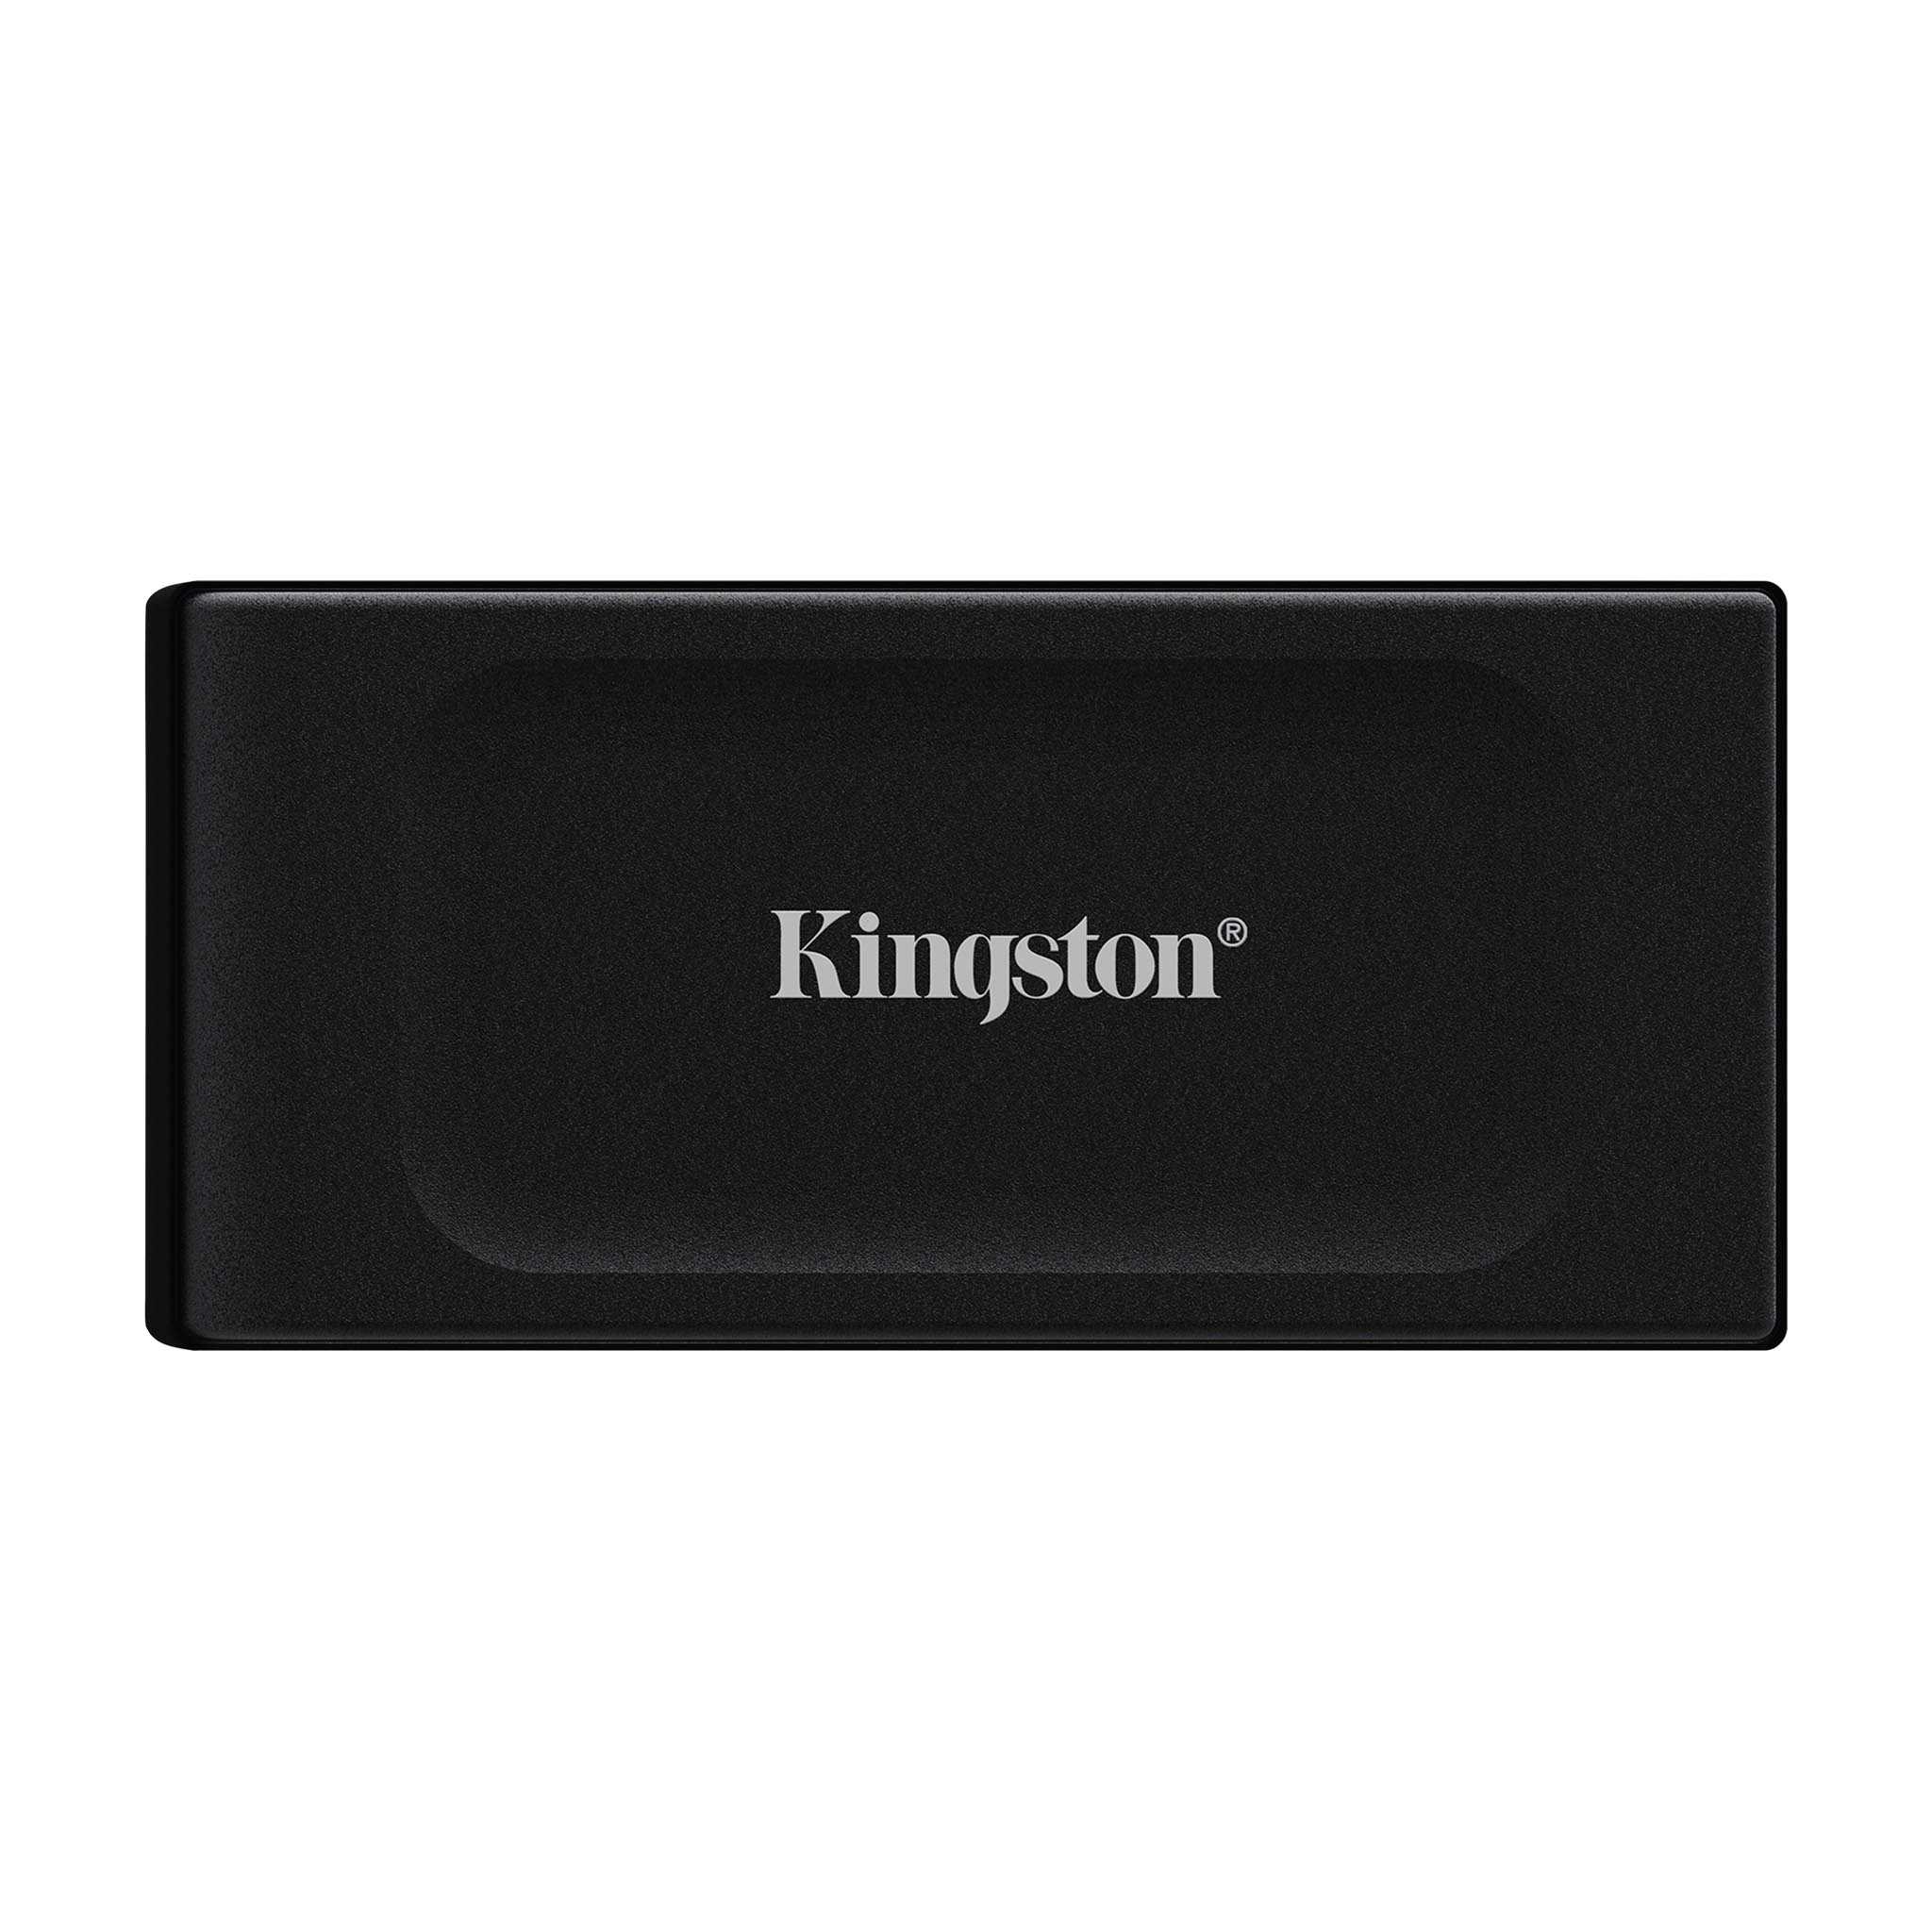 Kingston XS1000 External Solid State Drive (SSD) - 1TB